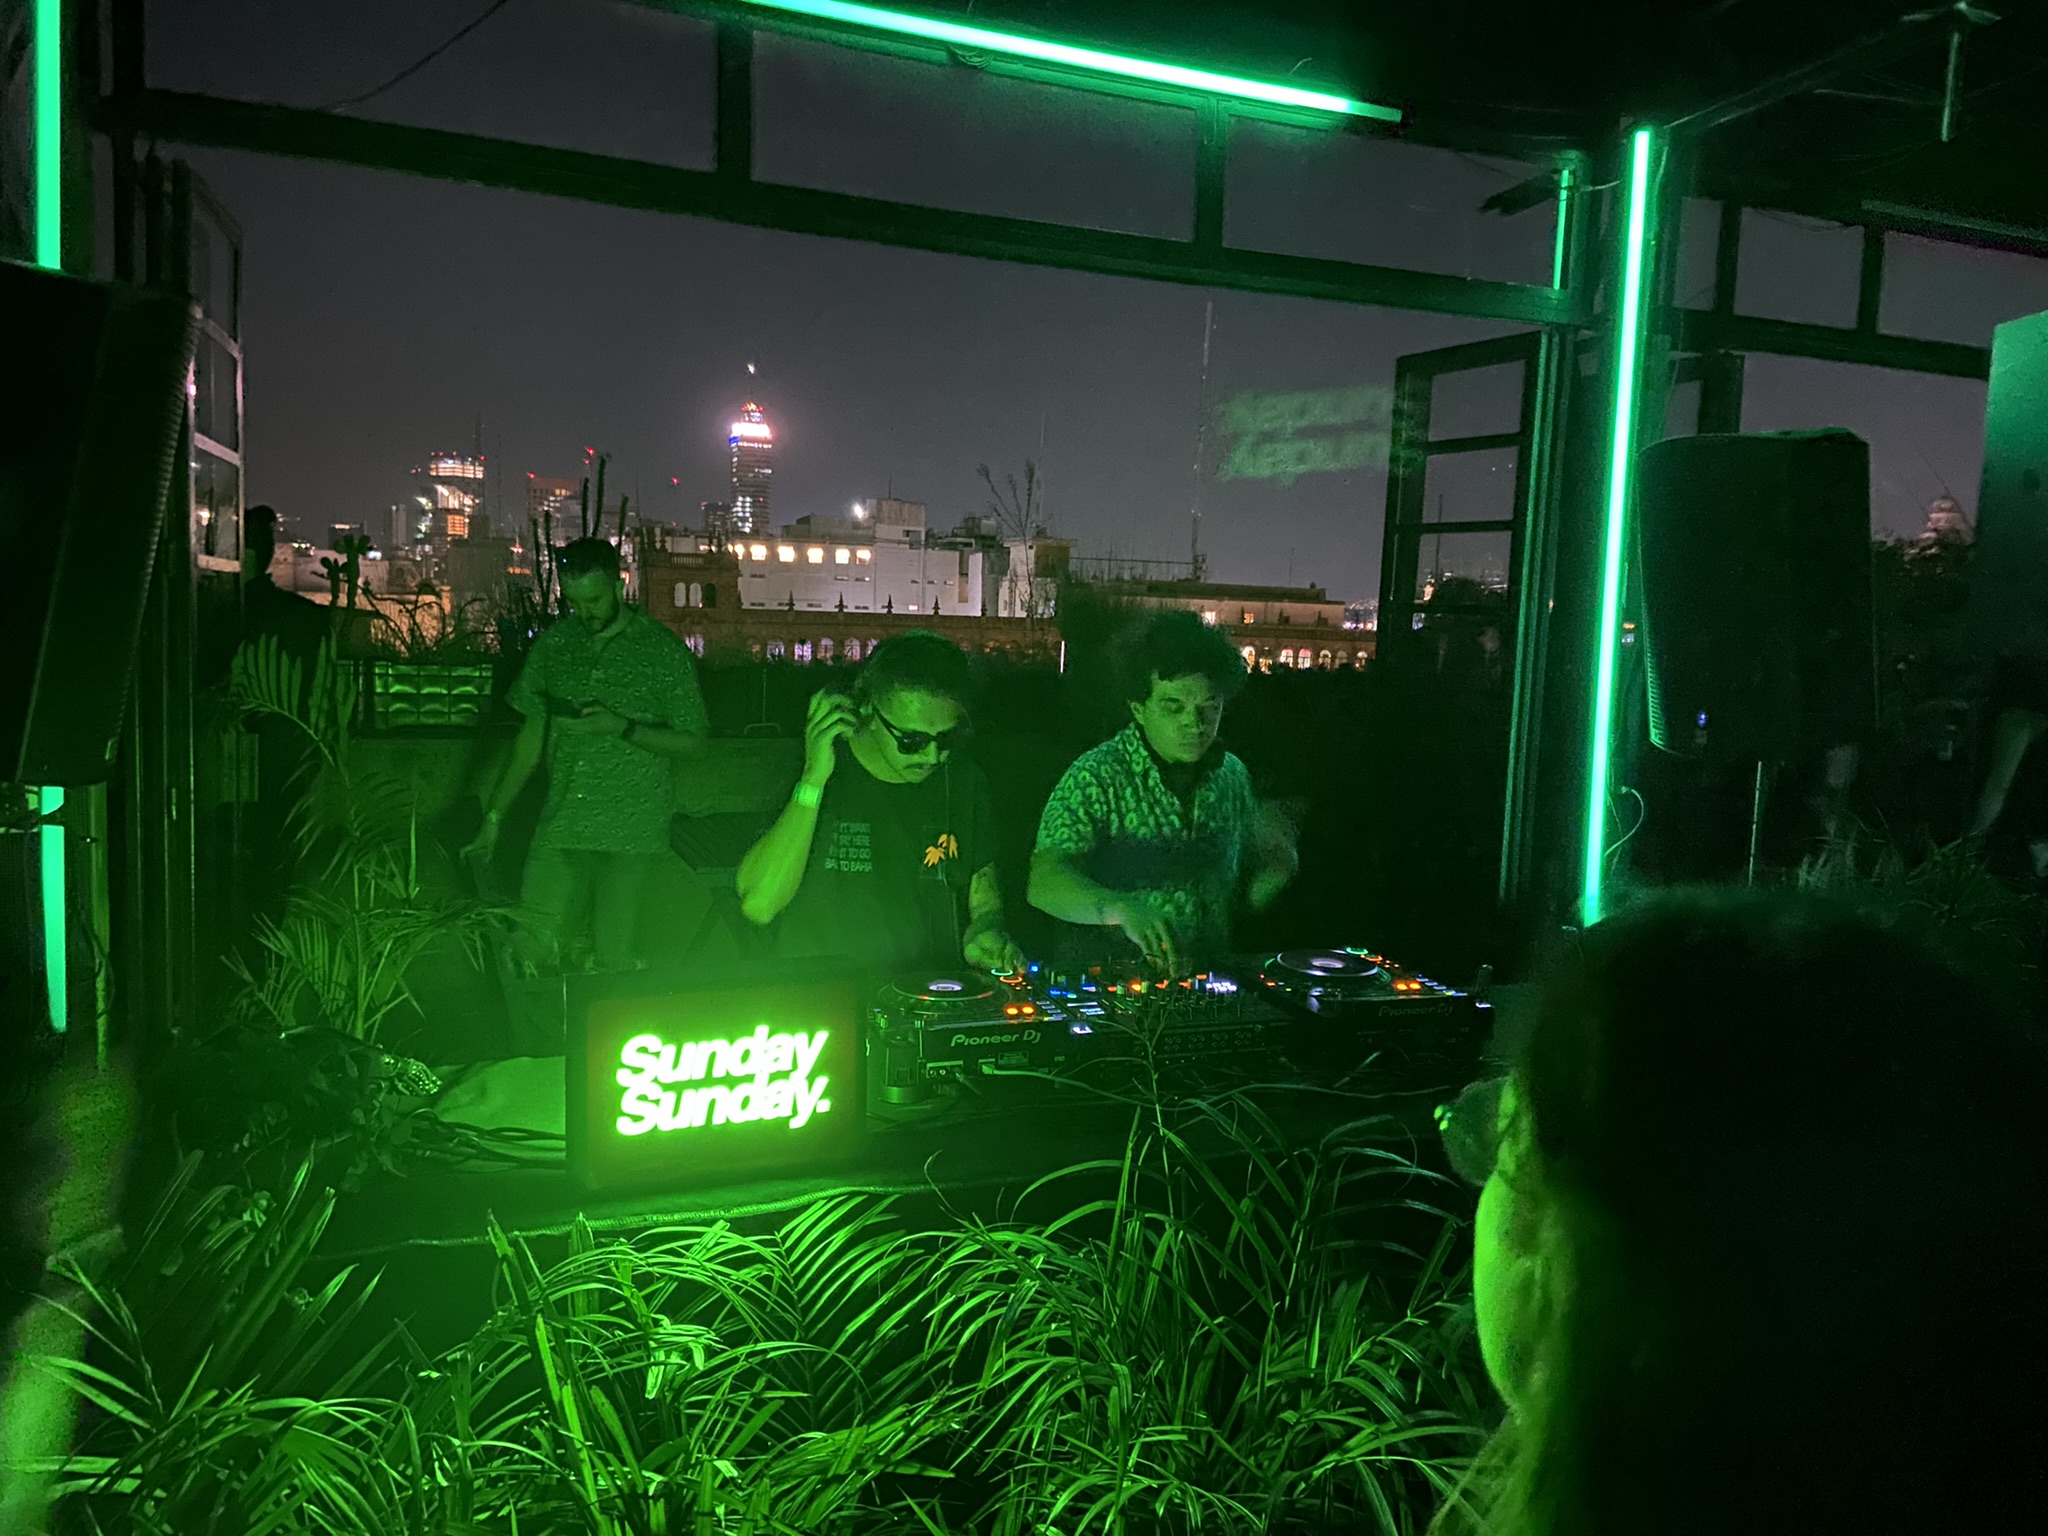 DJs in a Club in Mexico City